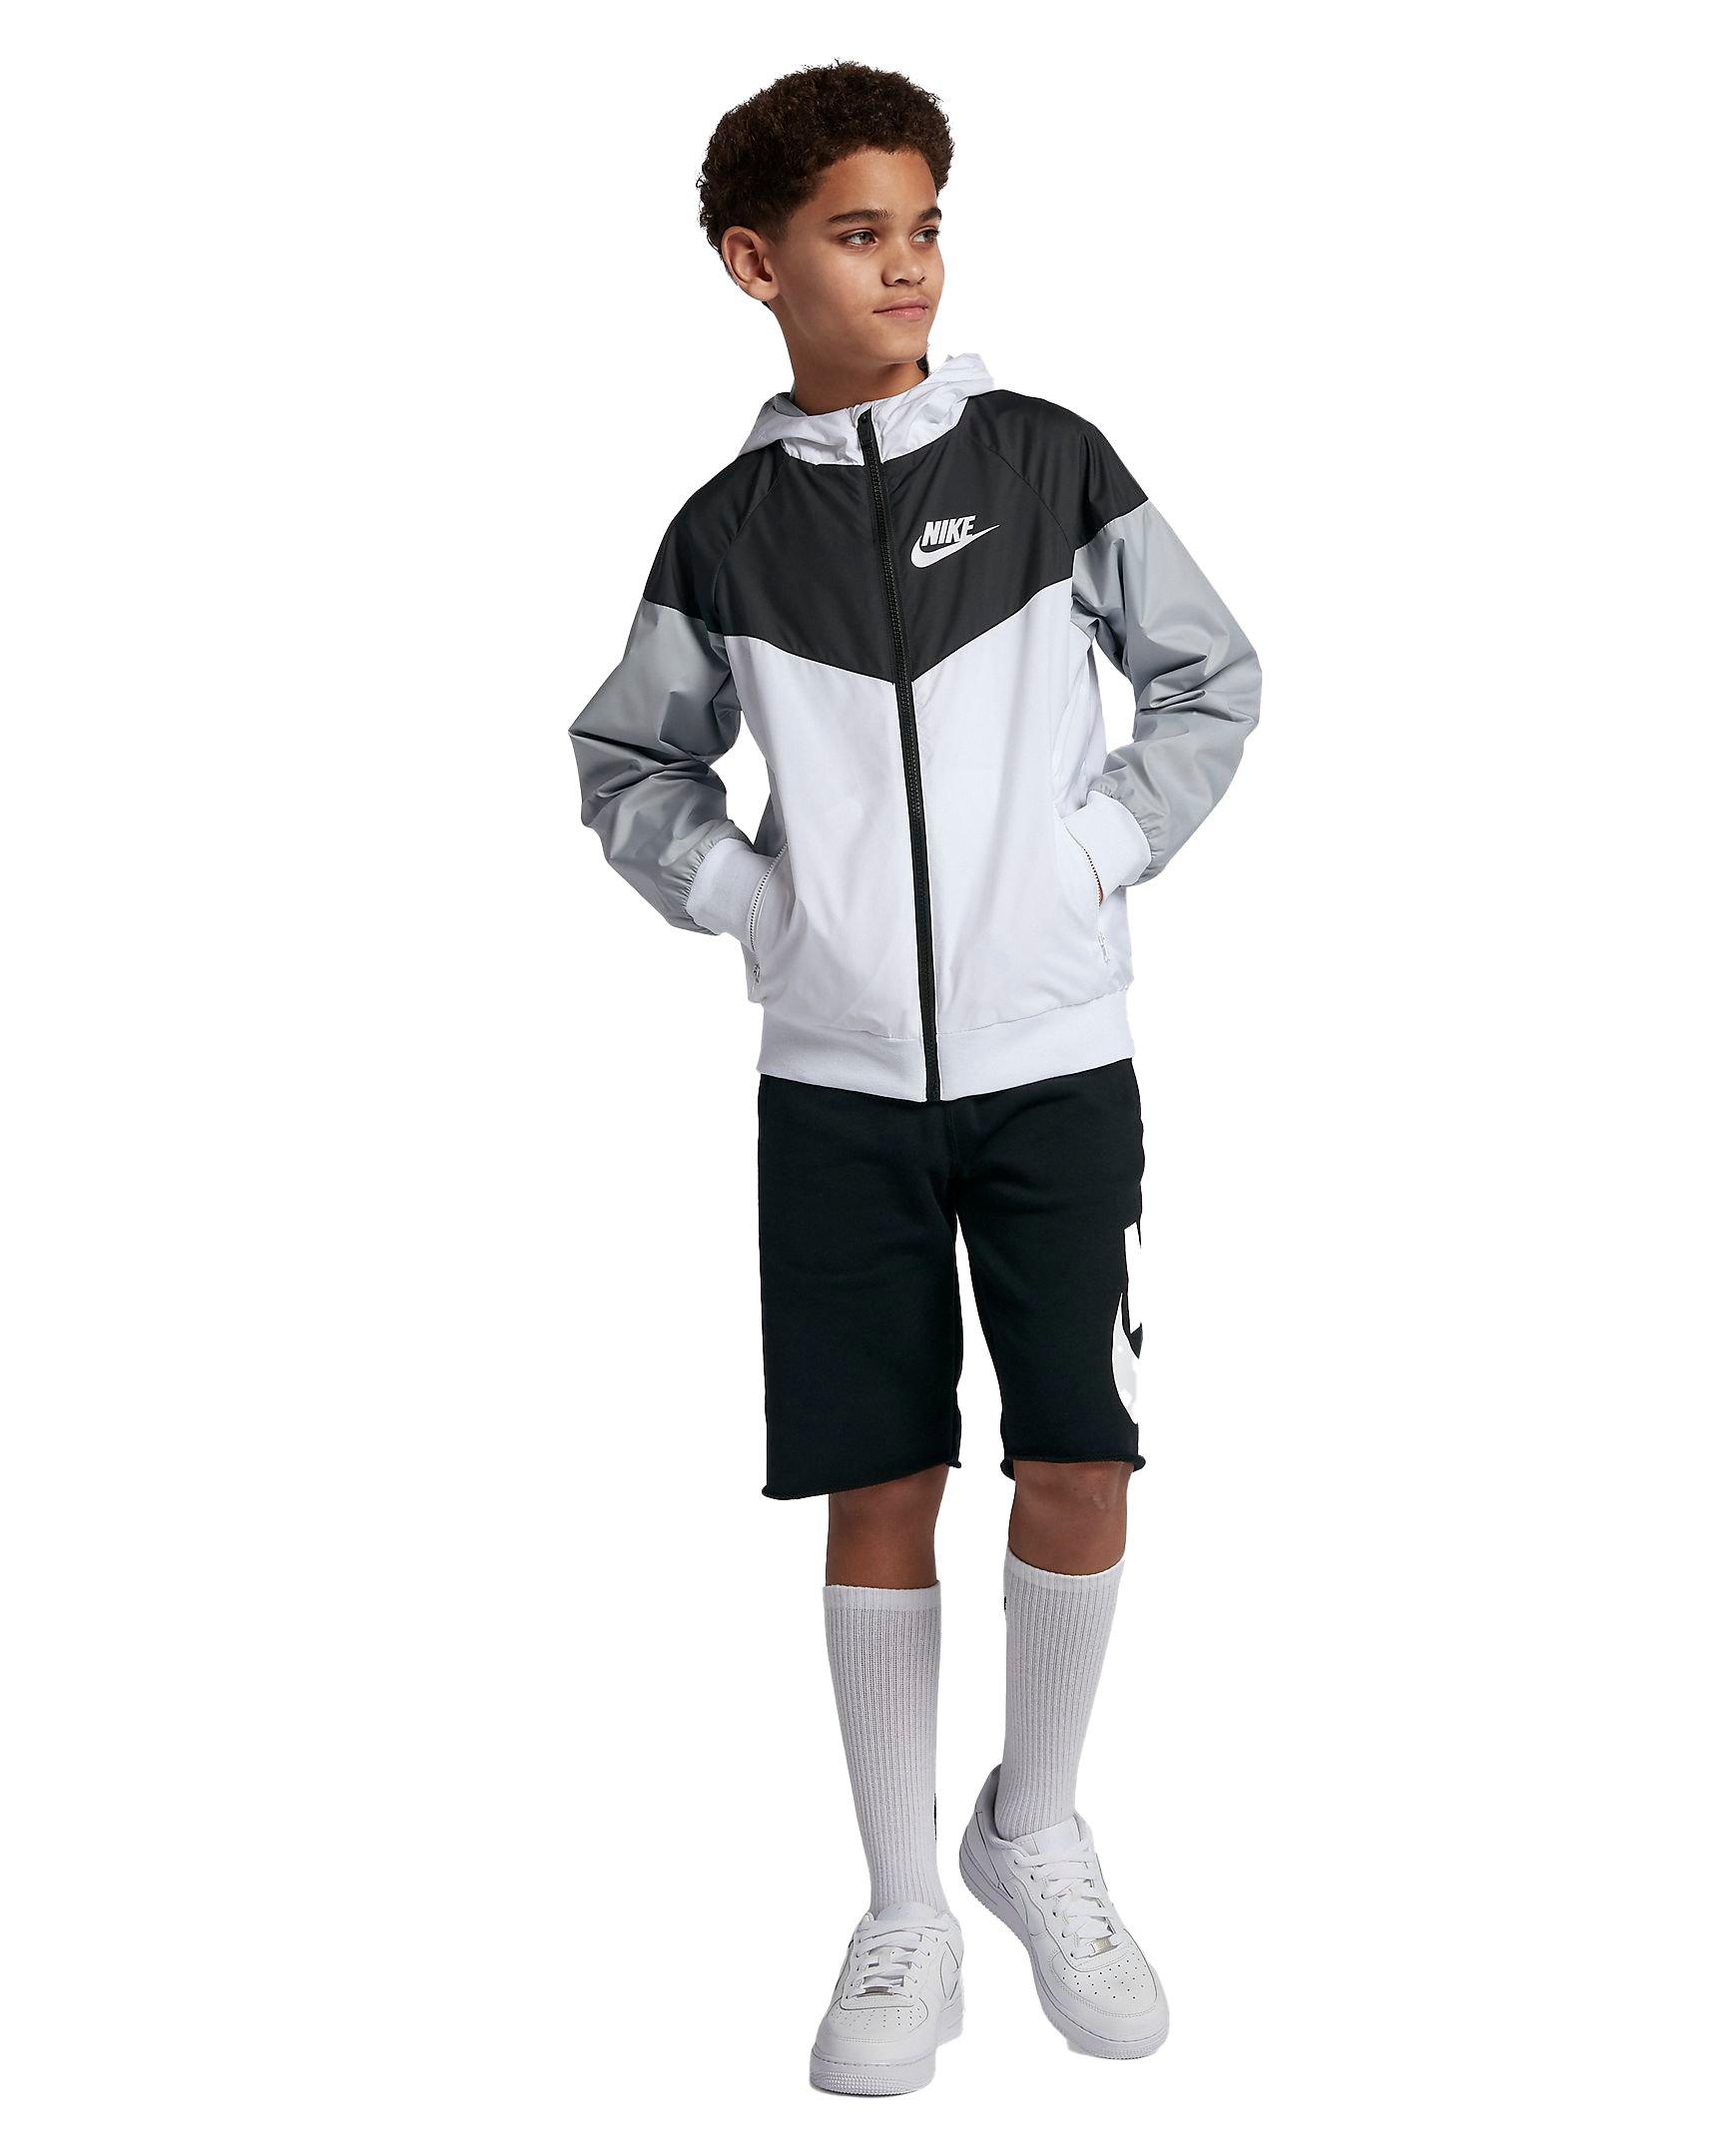 Boys Grey Nike Jacket | vlr.eng.br